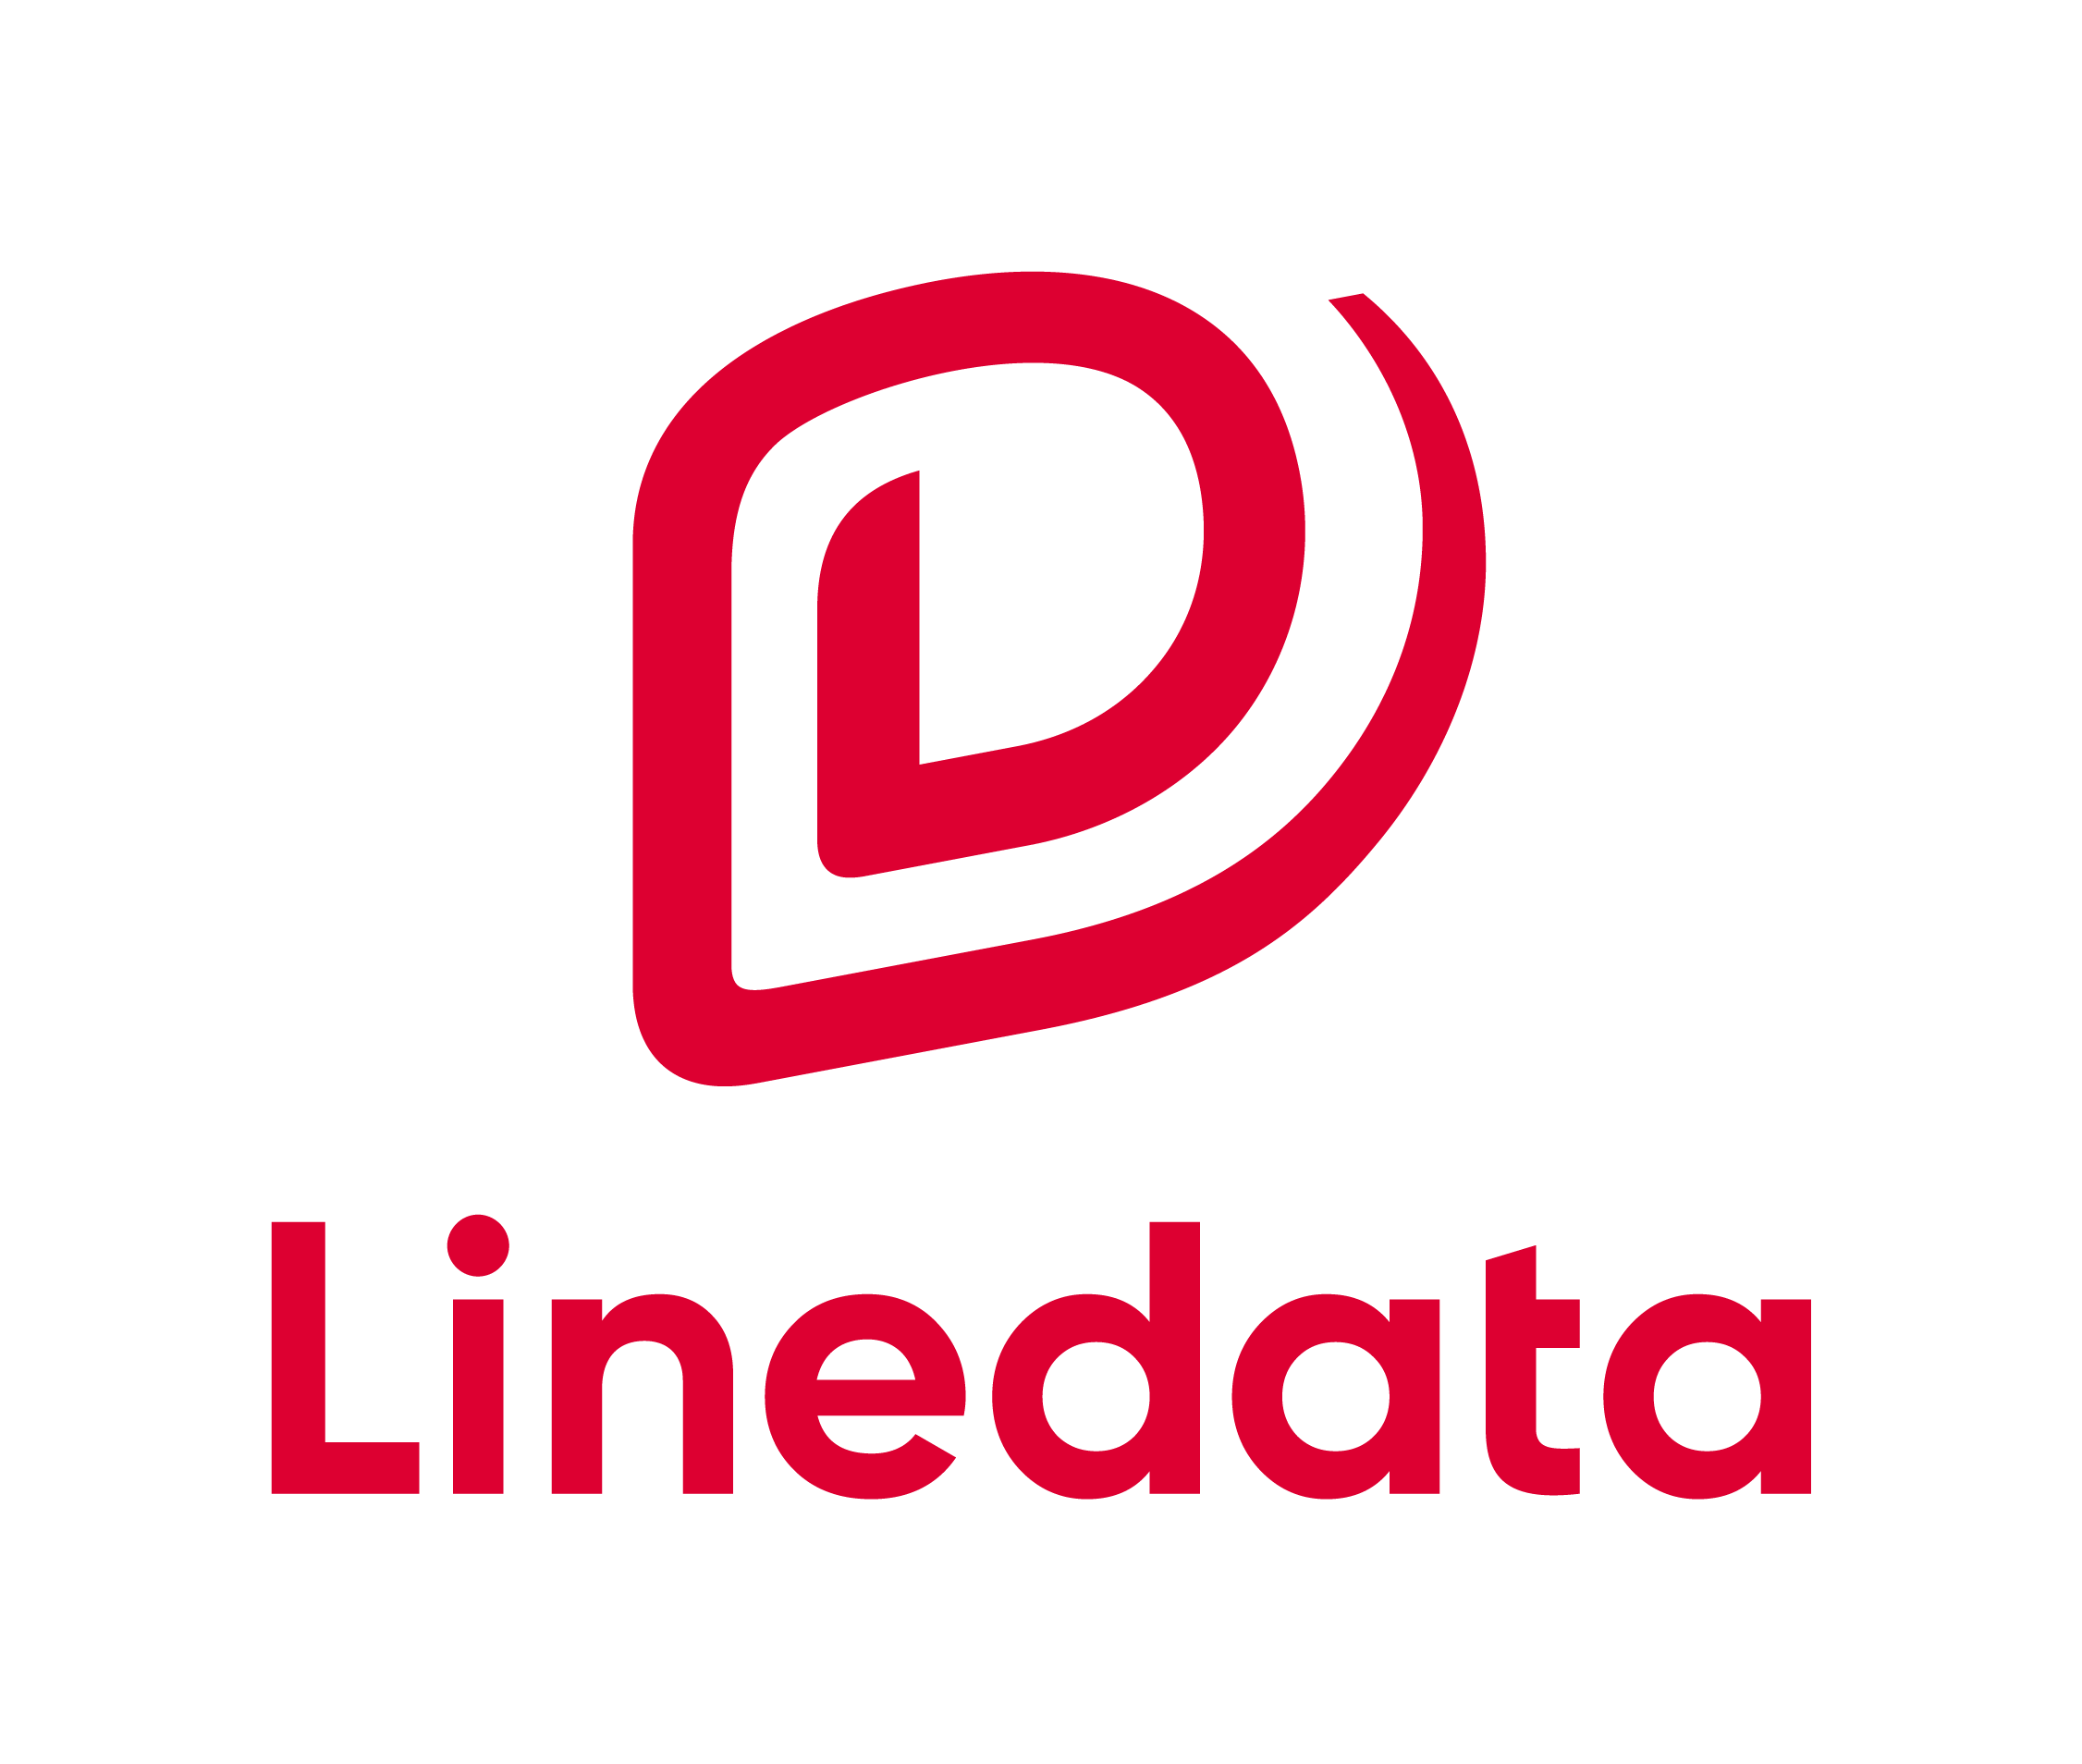 Linedata